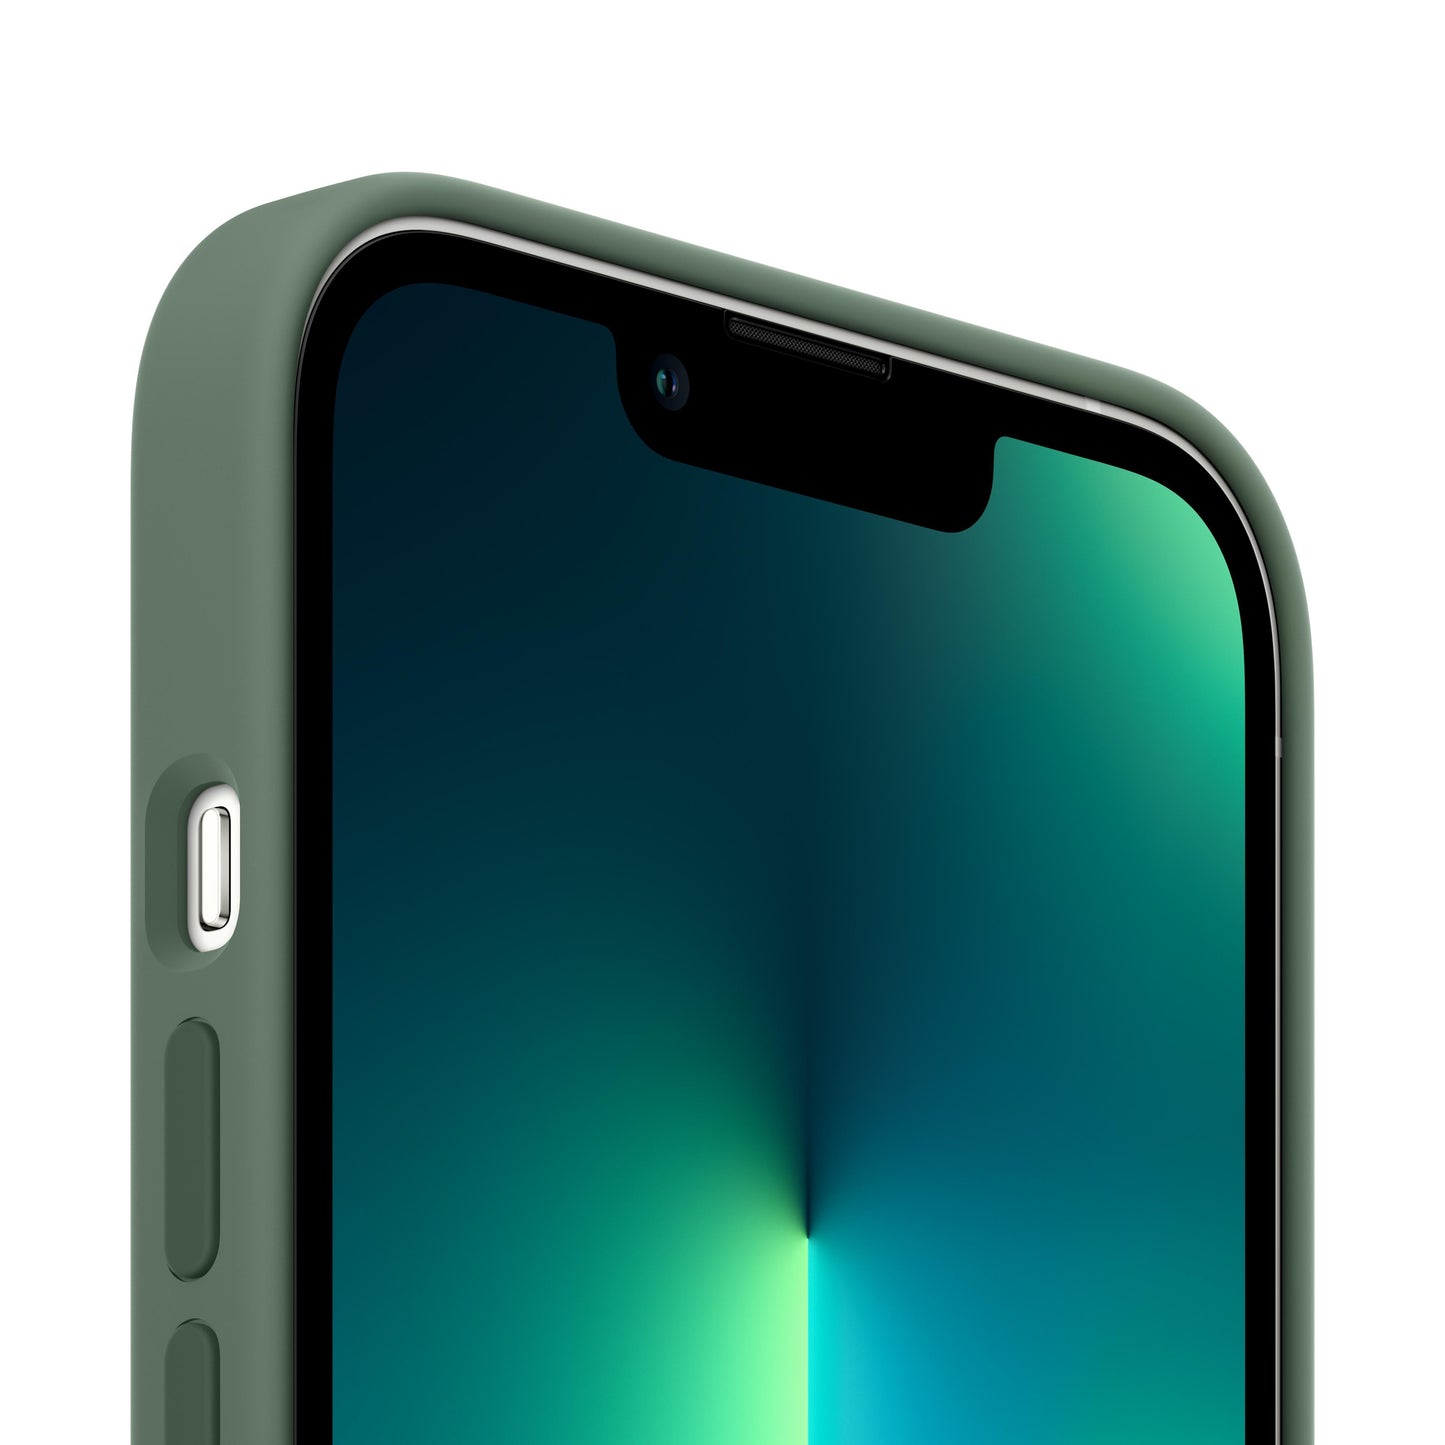 iPhone 13 Pro Silicone Case with MagSafe - Eucalyptus